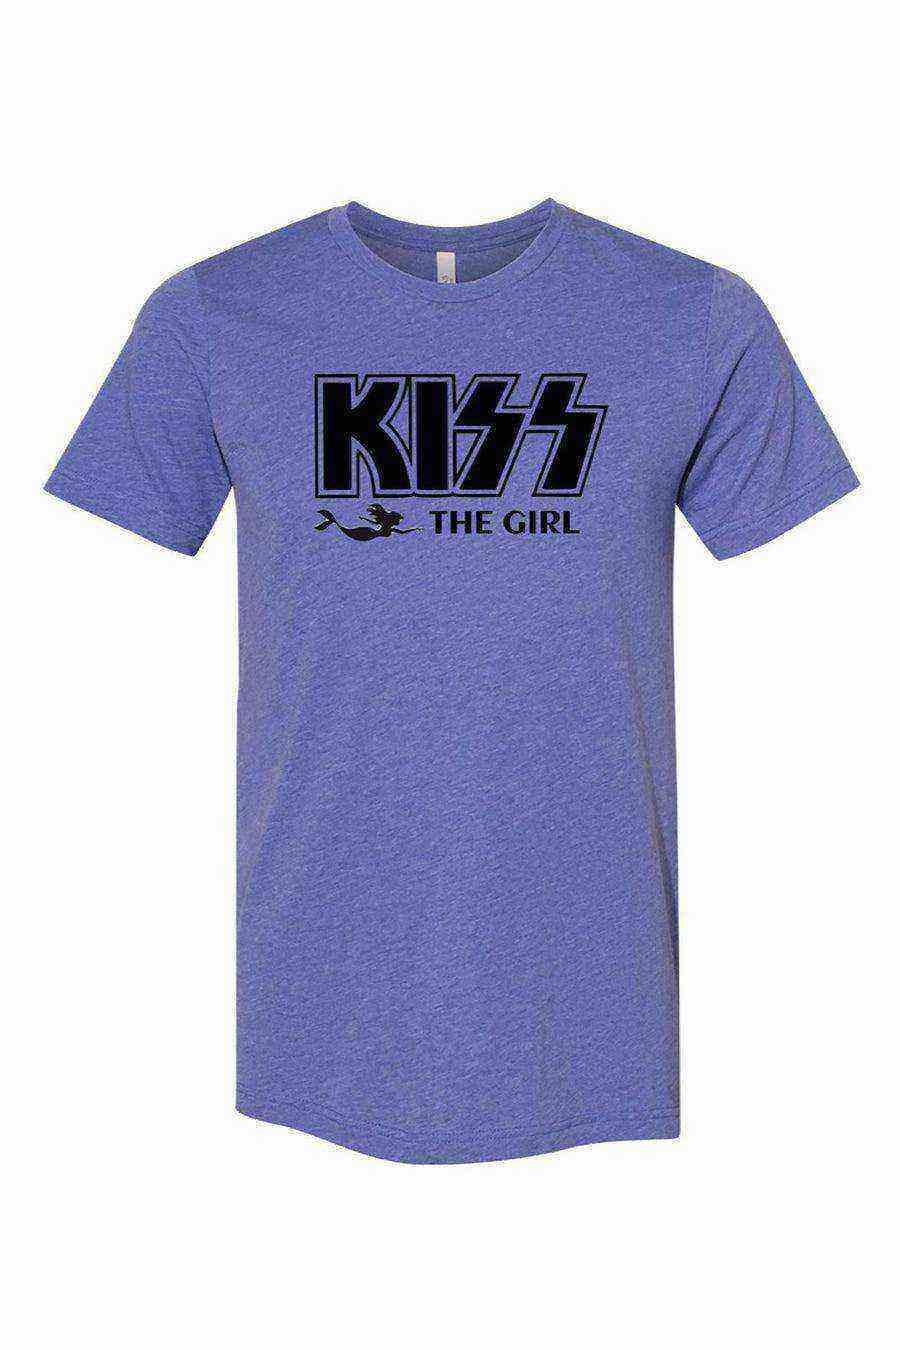 Toddler | Kiss The Girl Shirt | Little Mermaid Shirt | Kiss Shirt - Dylan's Tees